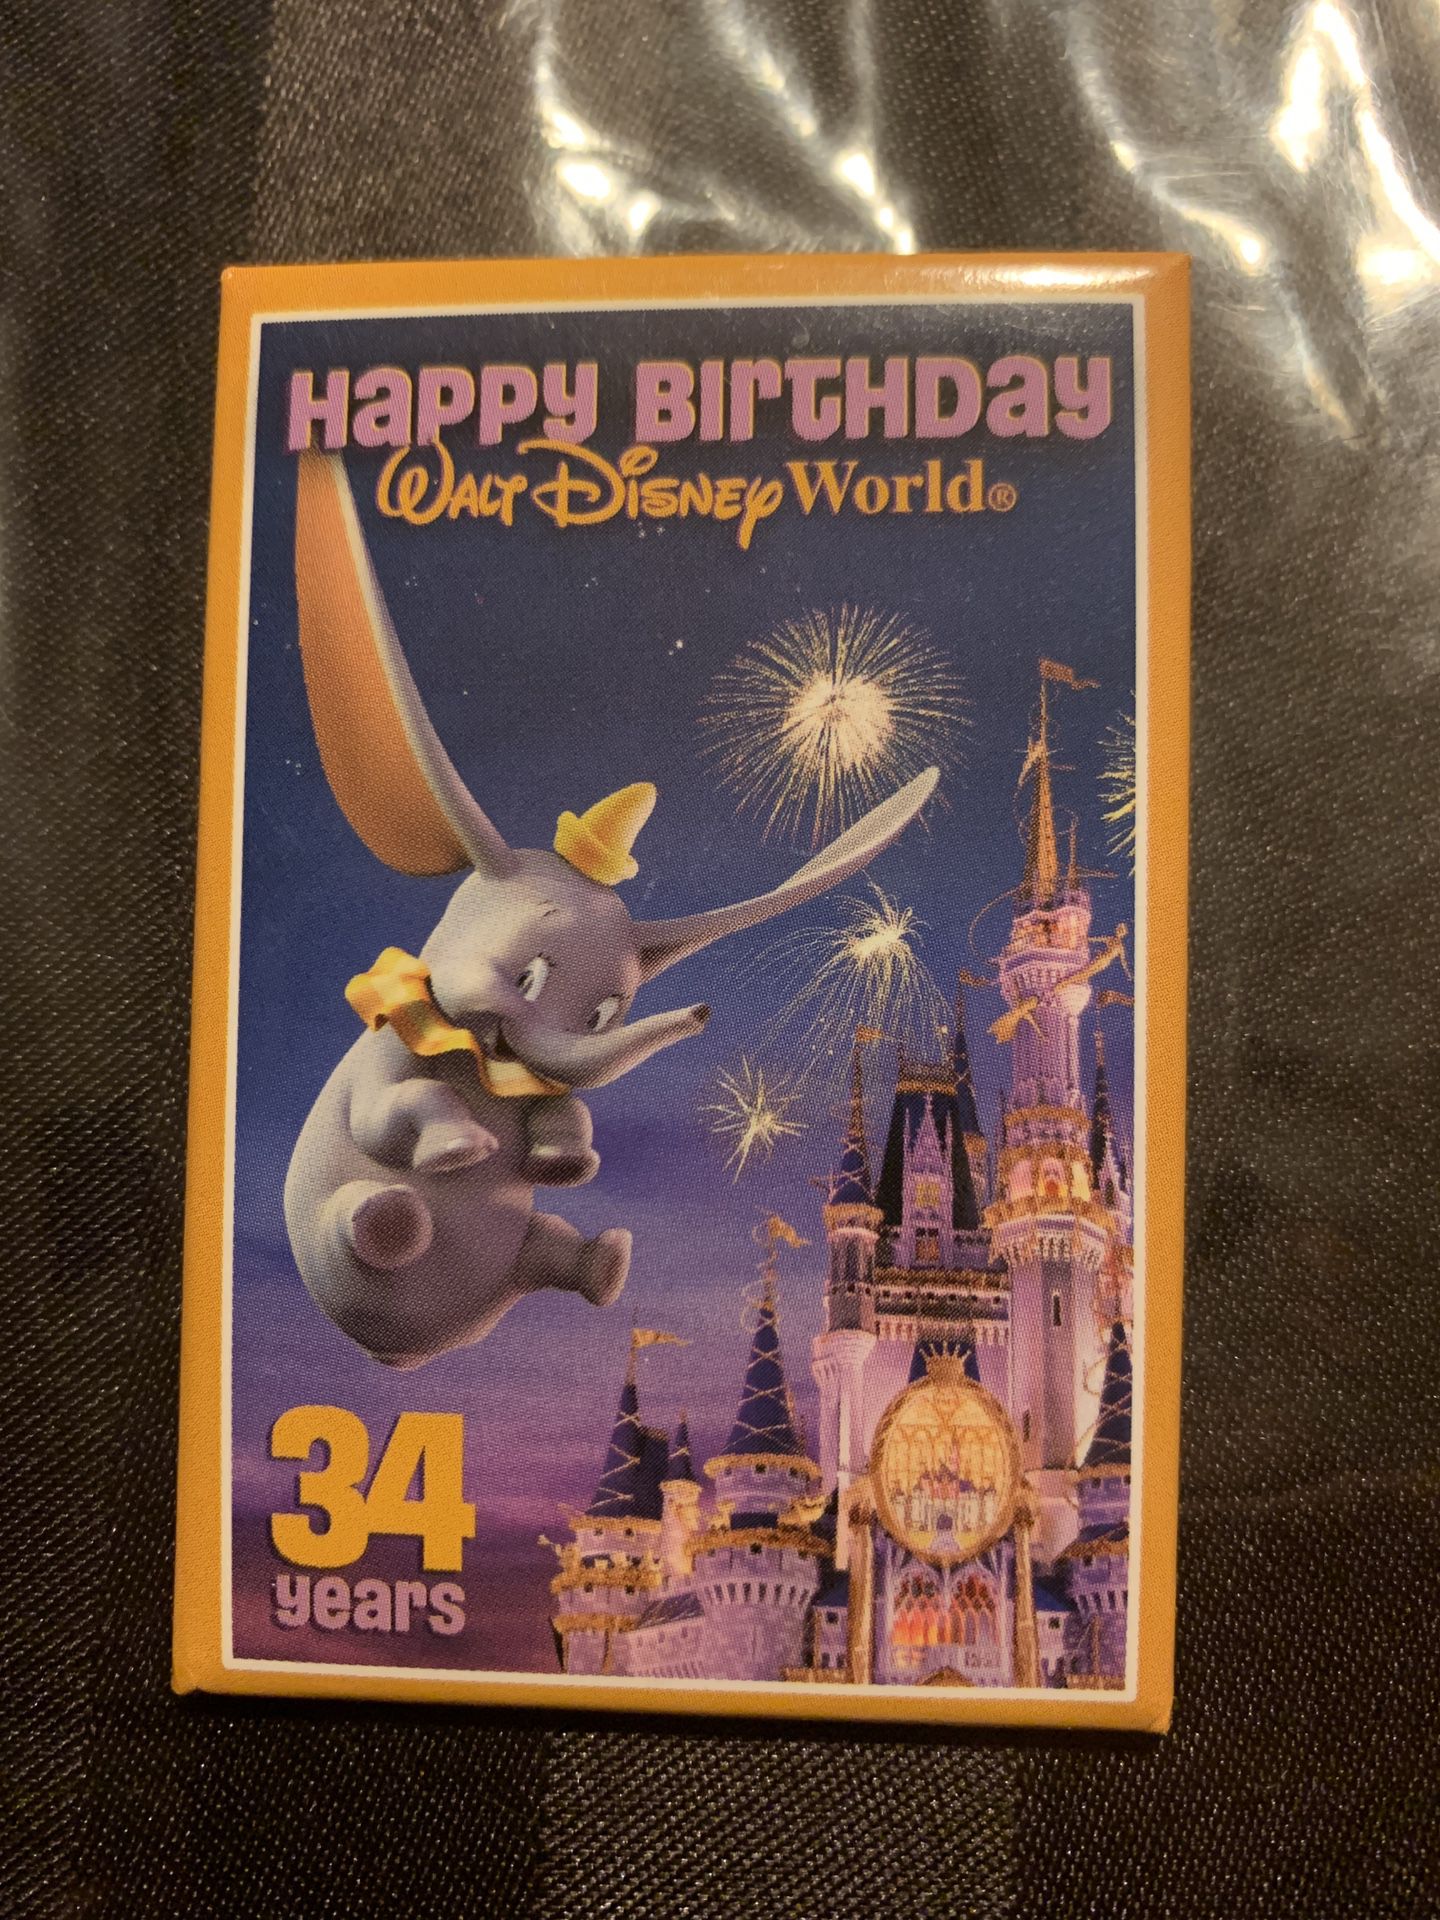 Disney World 2005 (34th Birthday) Cast Member Pin